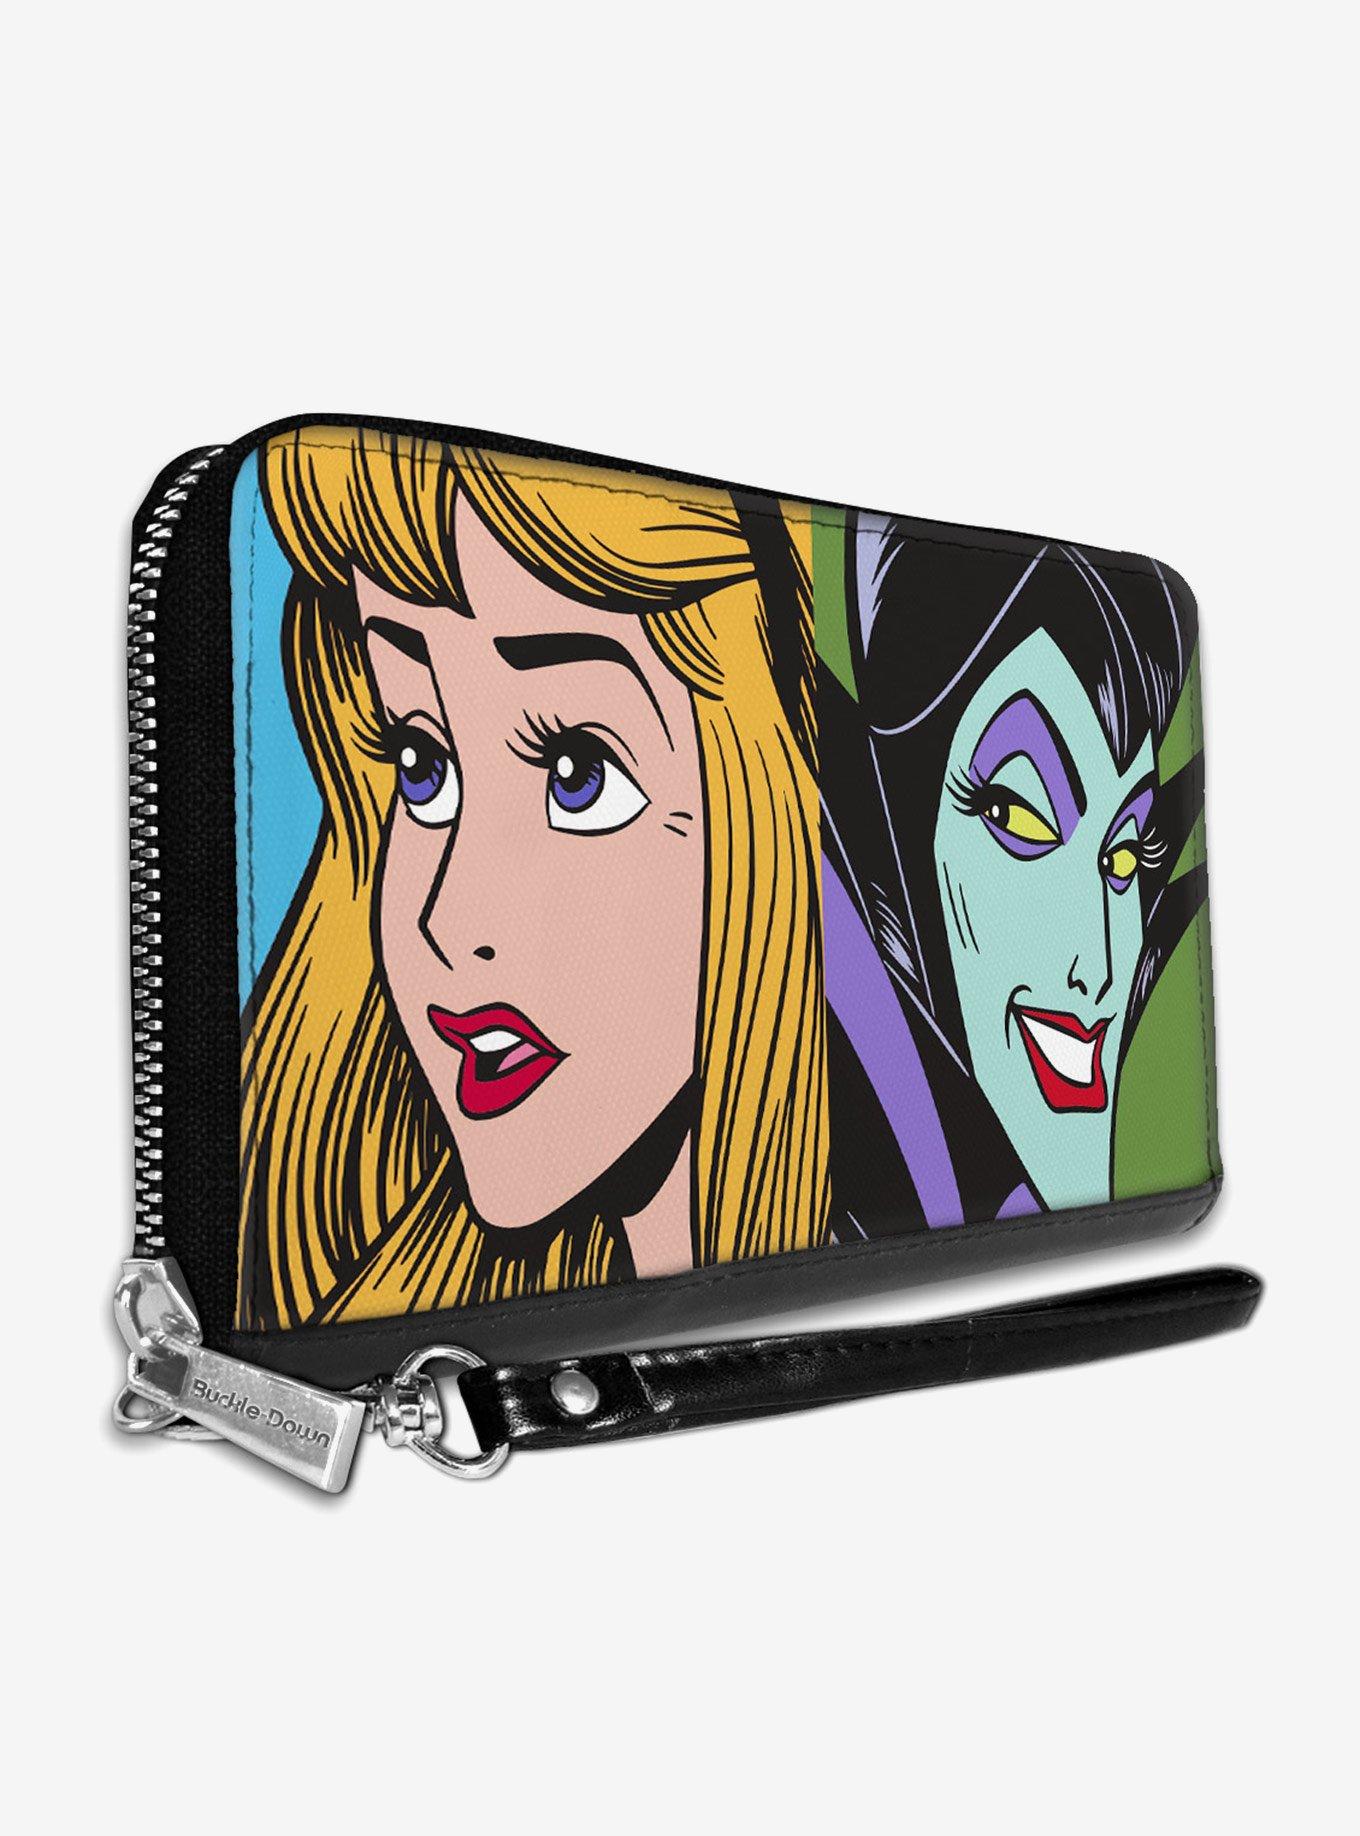 Sleeping Beauty Maleficent Zip-Around Wallet